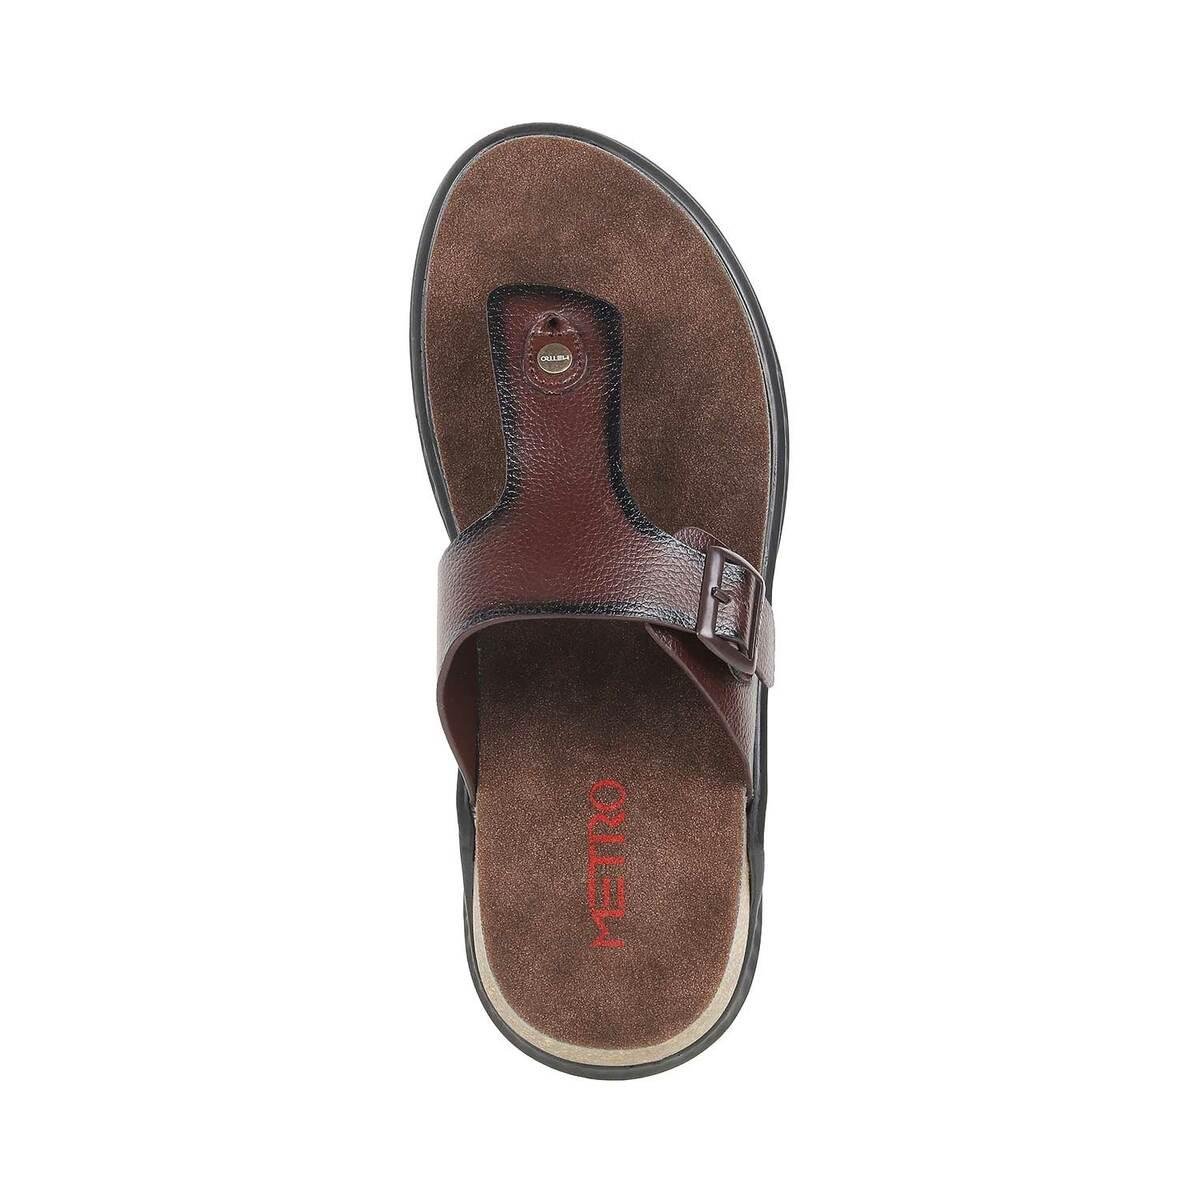 Adda Sandals - Buy Adda Sandals online in India